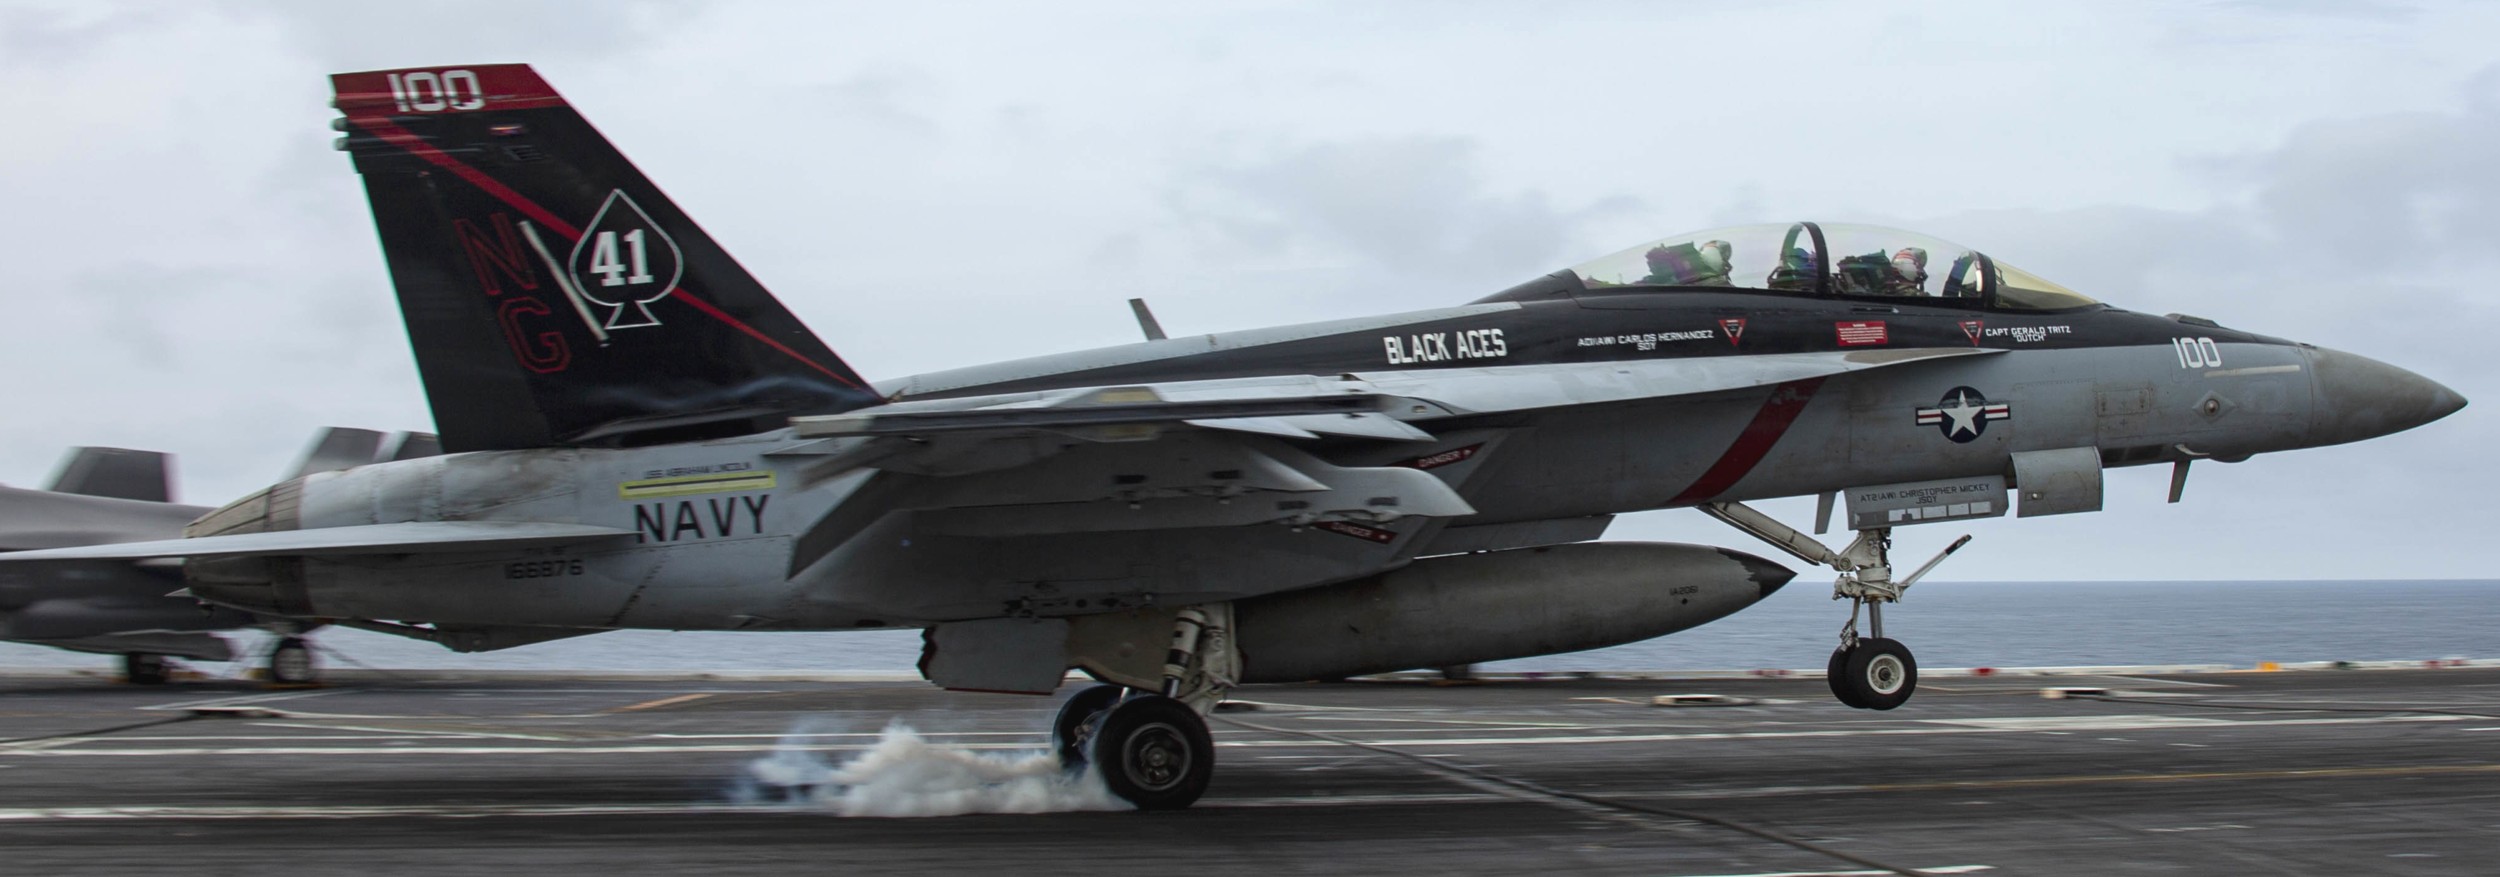 vfa-41 black aces strike fighter squadron f/a-18f super hornet cvw-9 cvn-72 uss abraham lincoln us navy 112